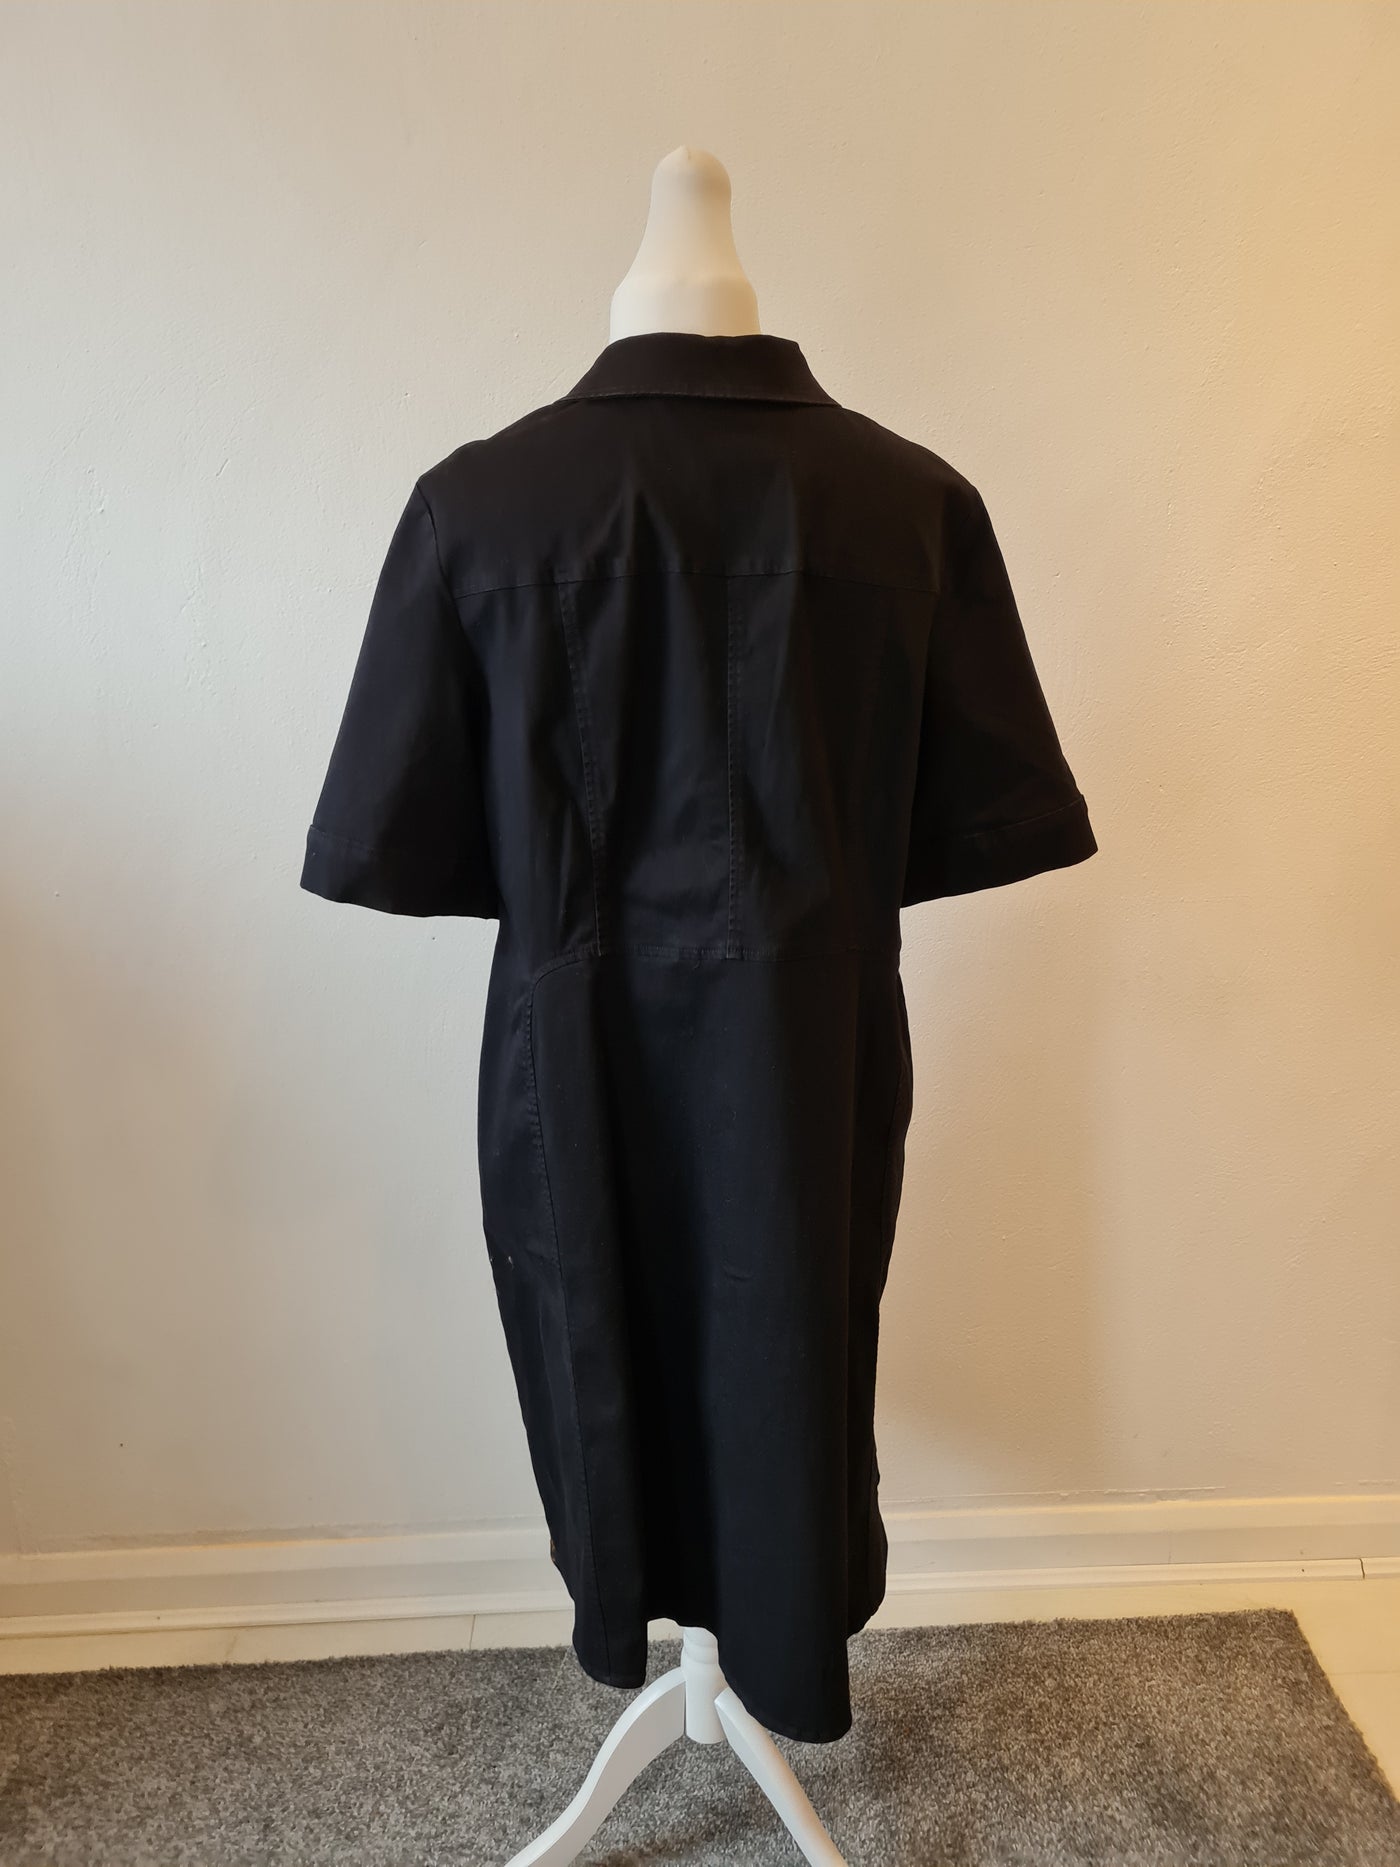 Nina Leonard Black Denim Shirt Dress Size 2XL